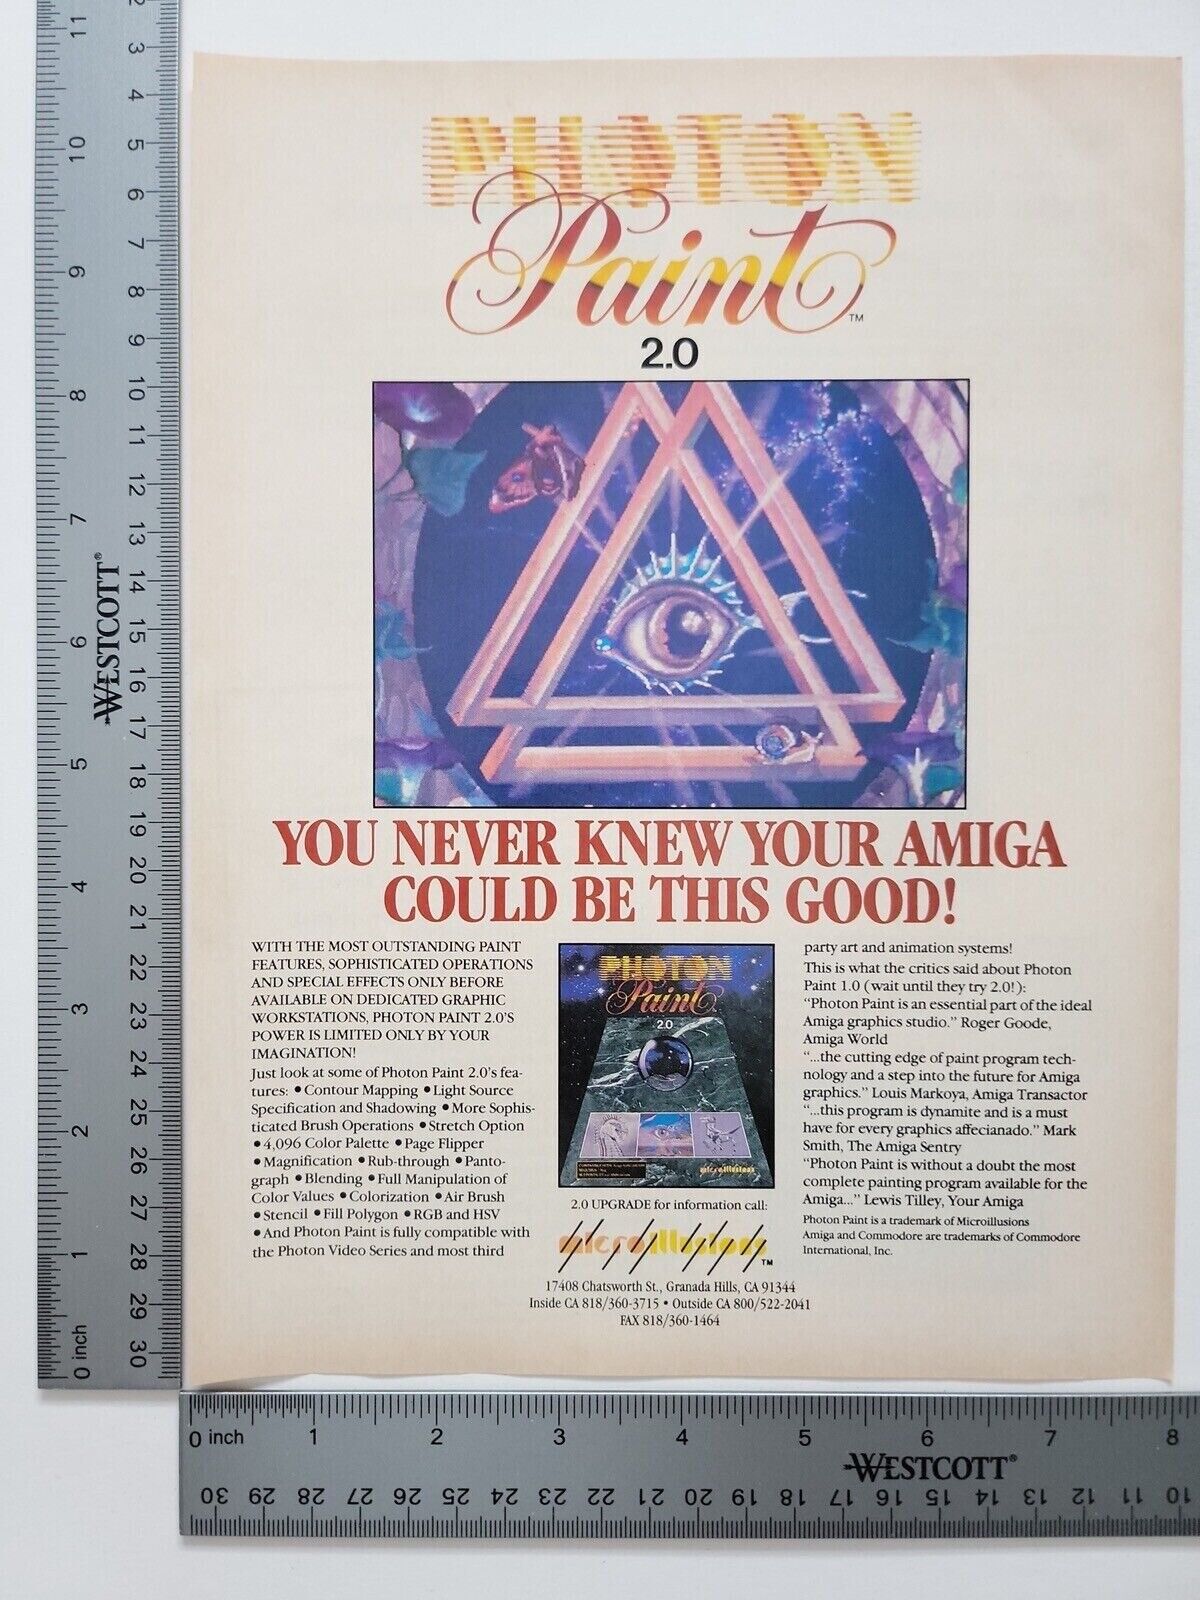 Photon Paint 2.0 Amiga Vintage Computer Software Print Advertisement